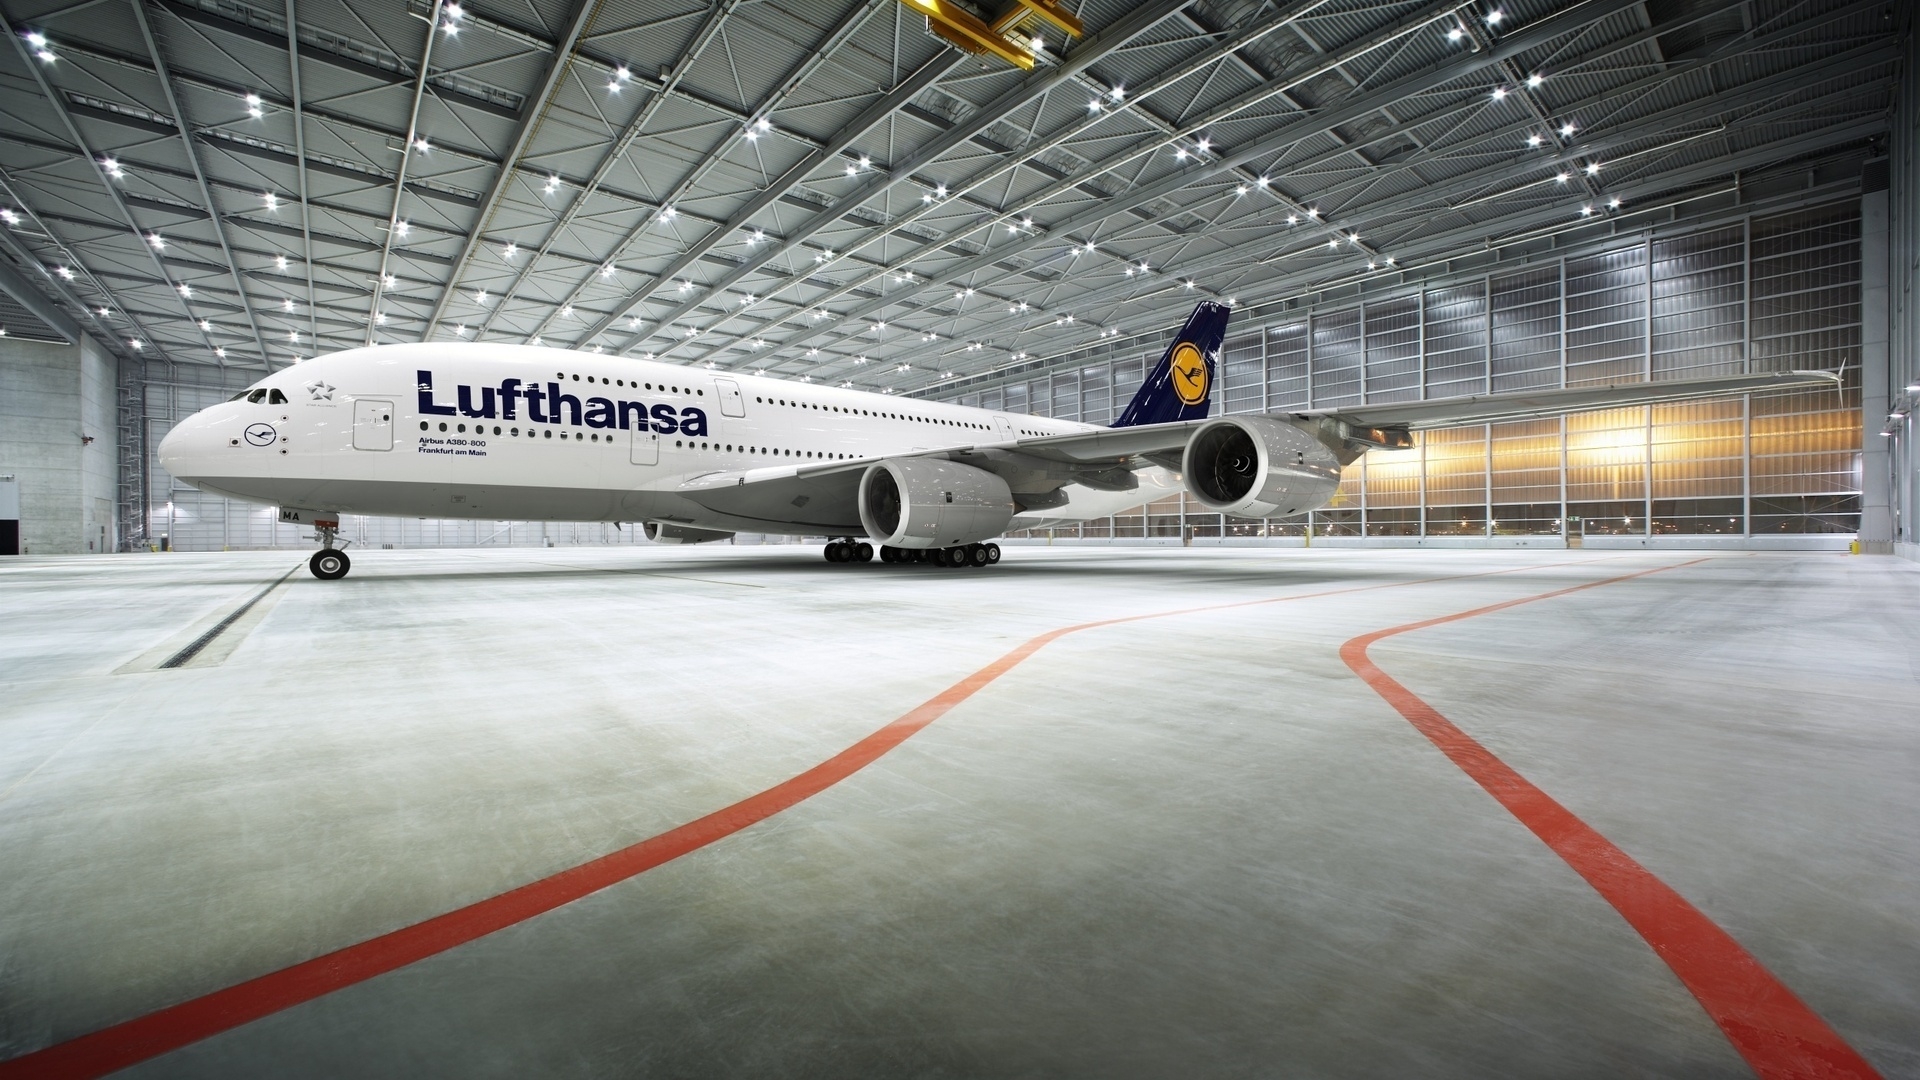 Lufthansa for 1920 x 1080 HDTV 1080p resolution